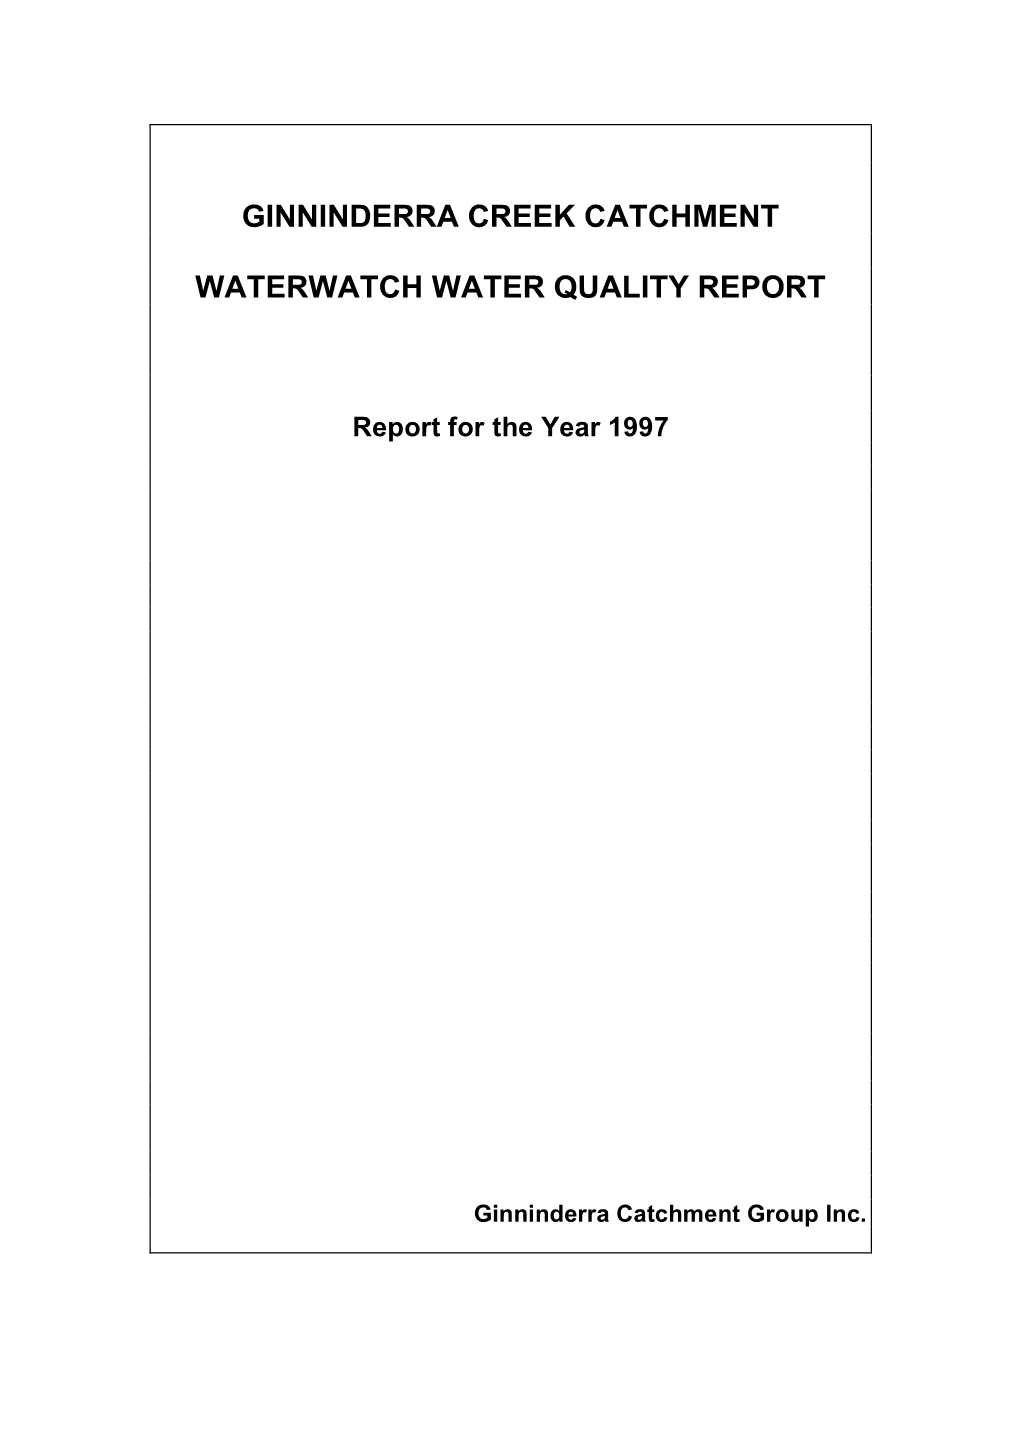 Ginninderra Creek Catchment Waterwatch Water Quality